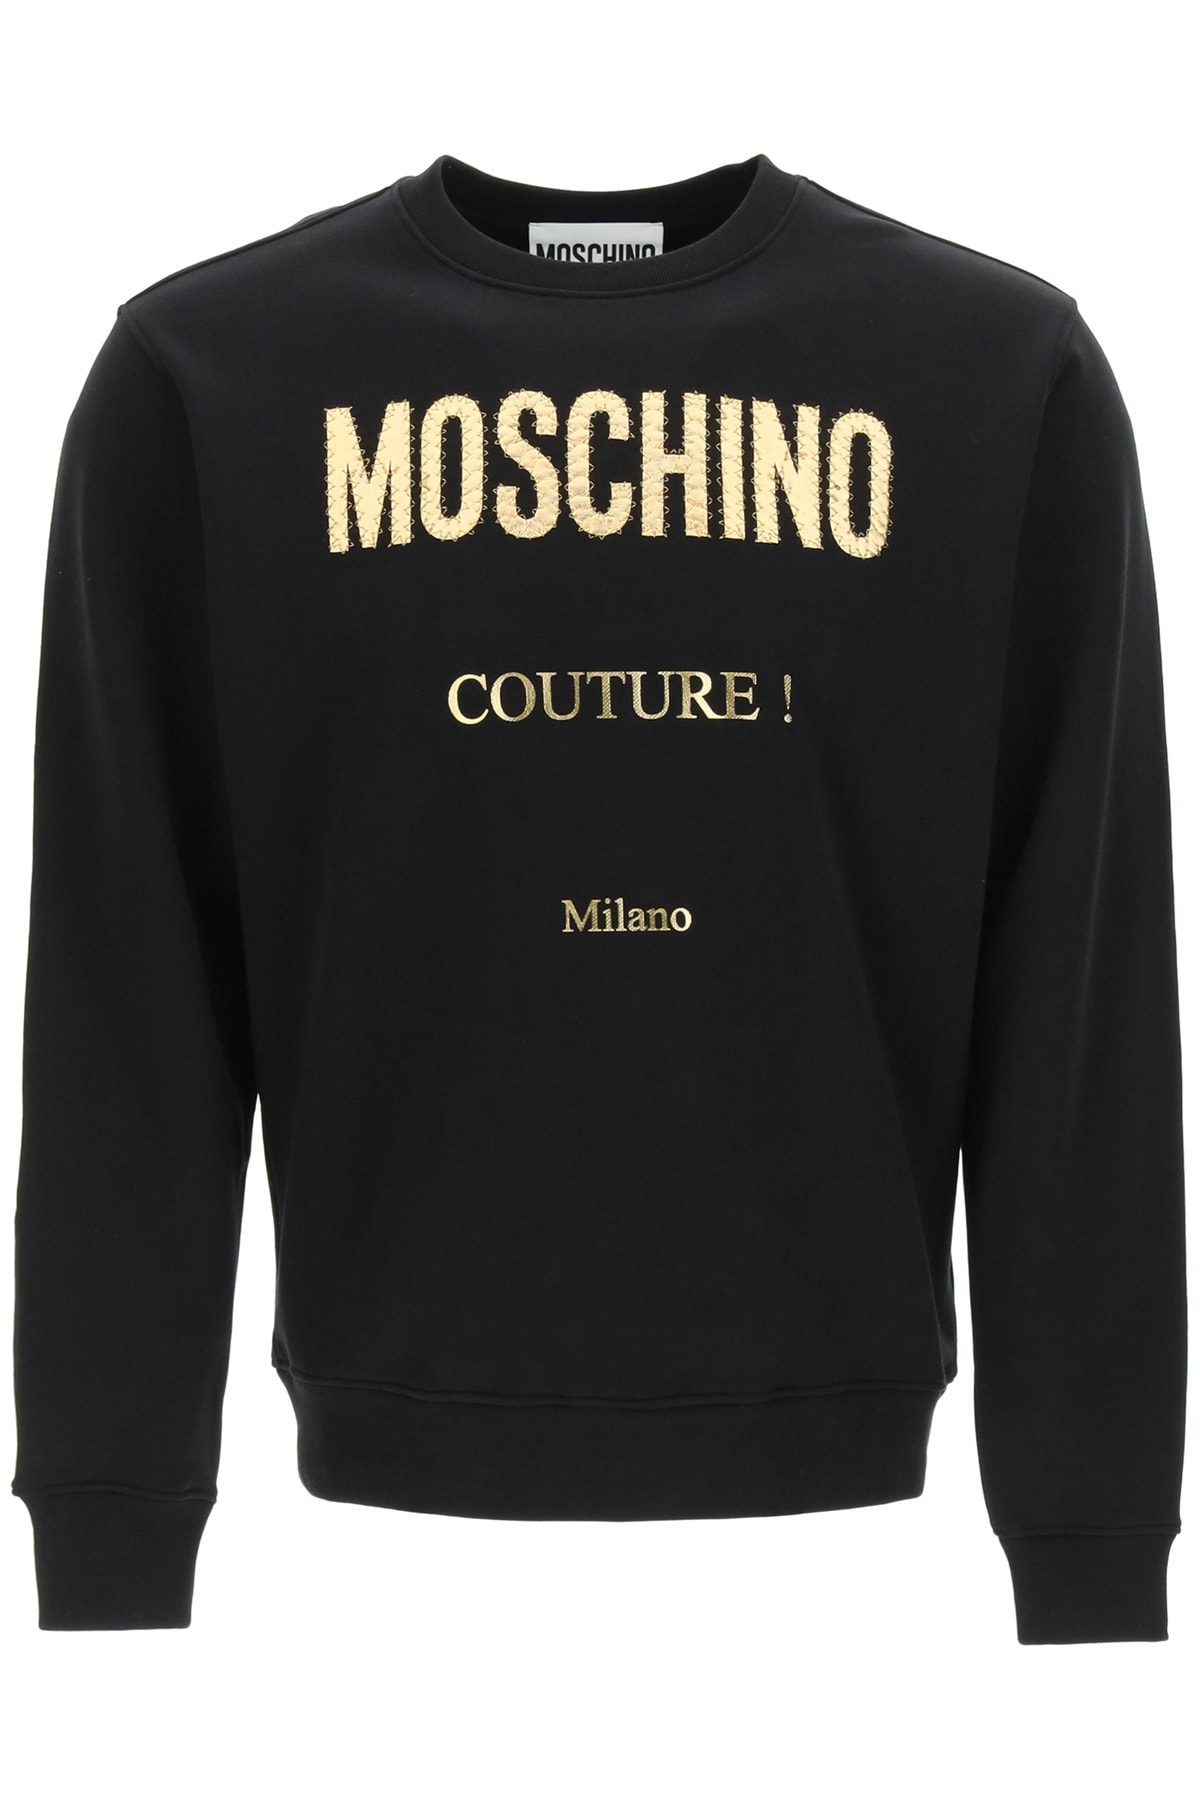 Moschino Golden Logo Sweatshirt